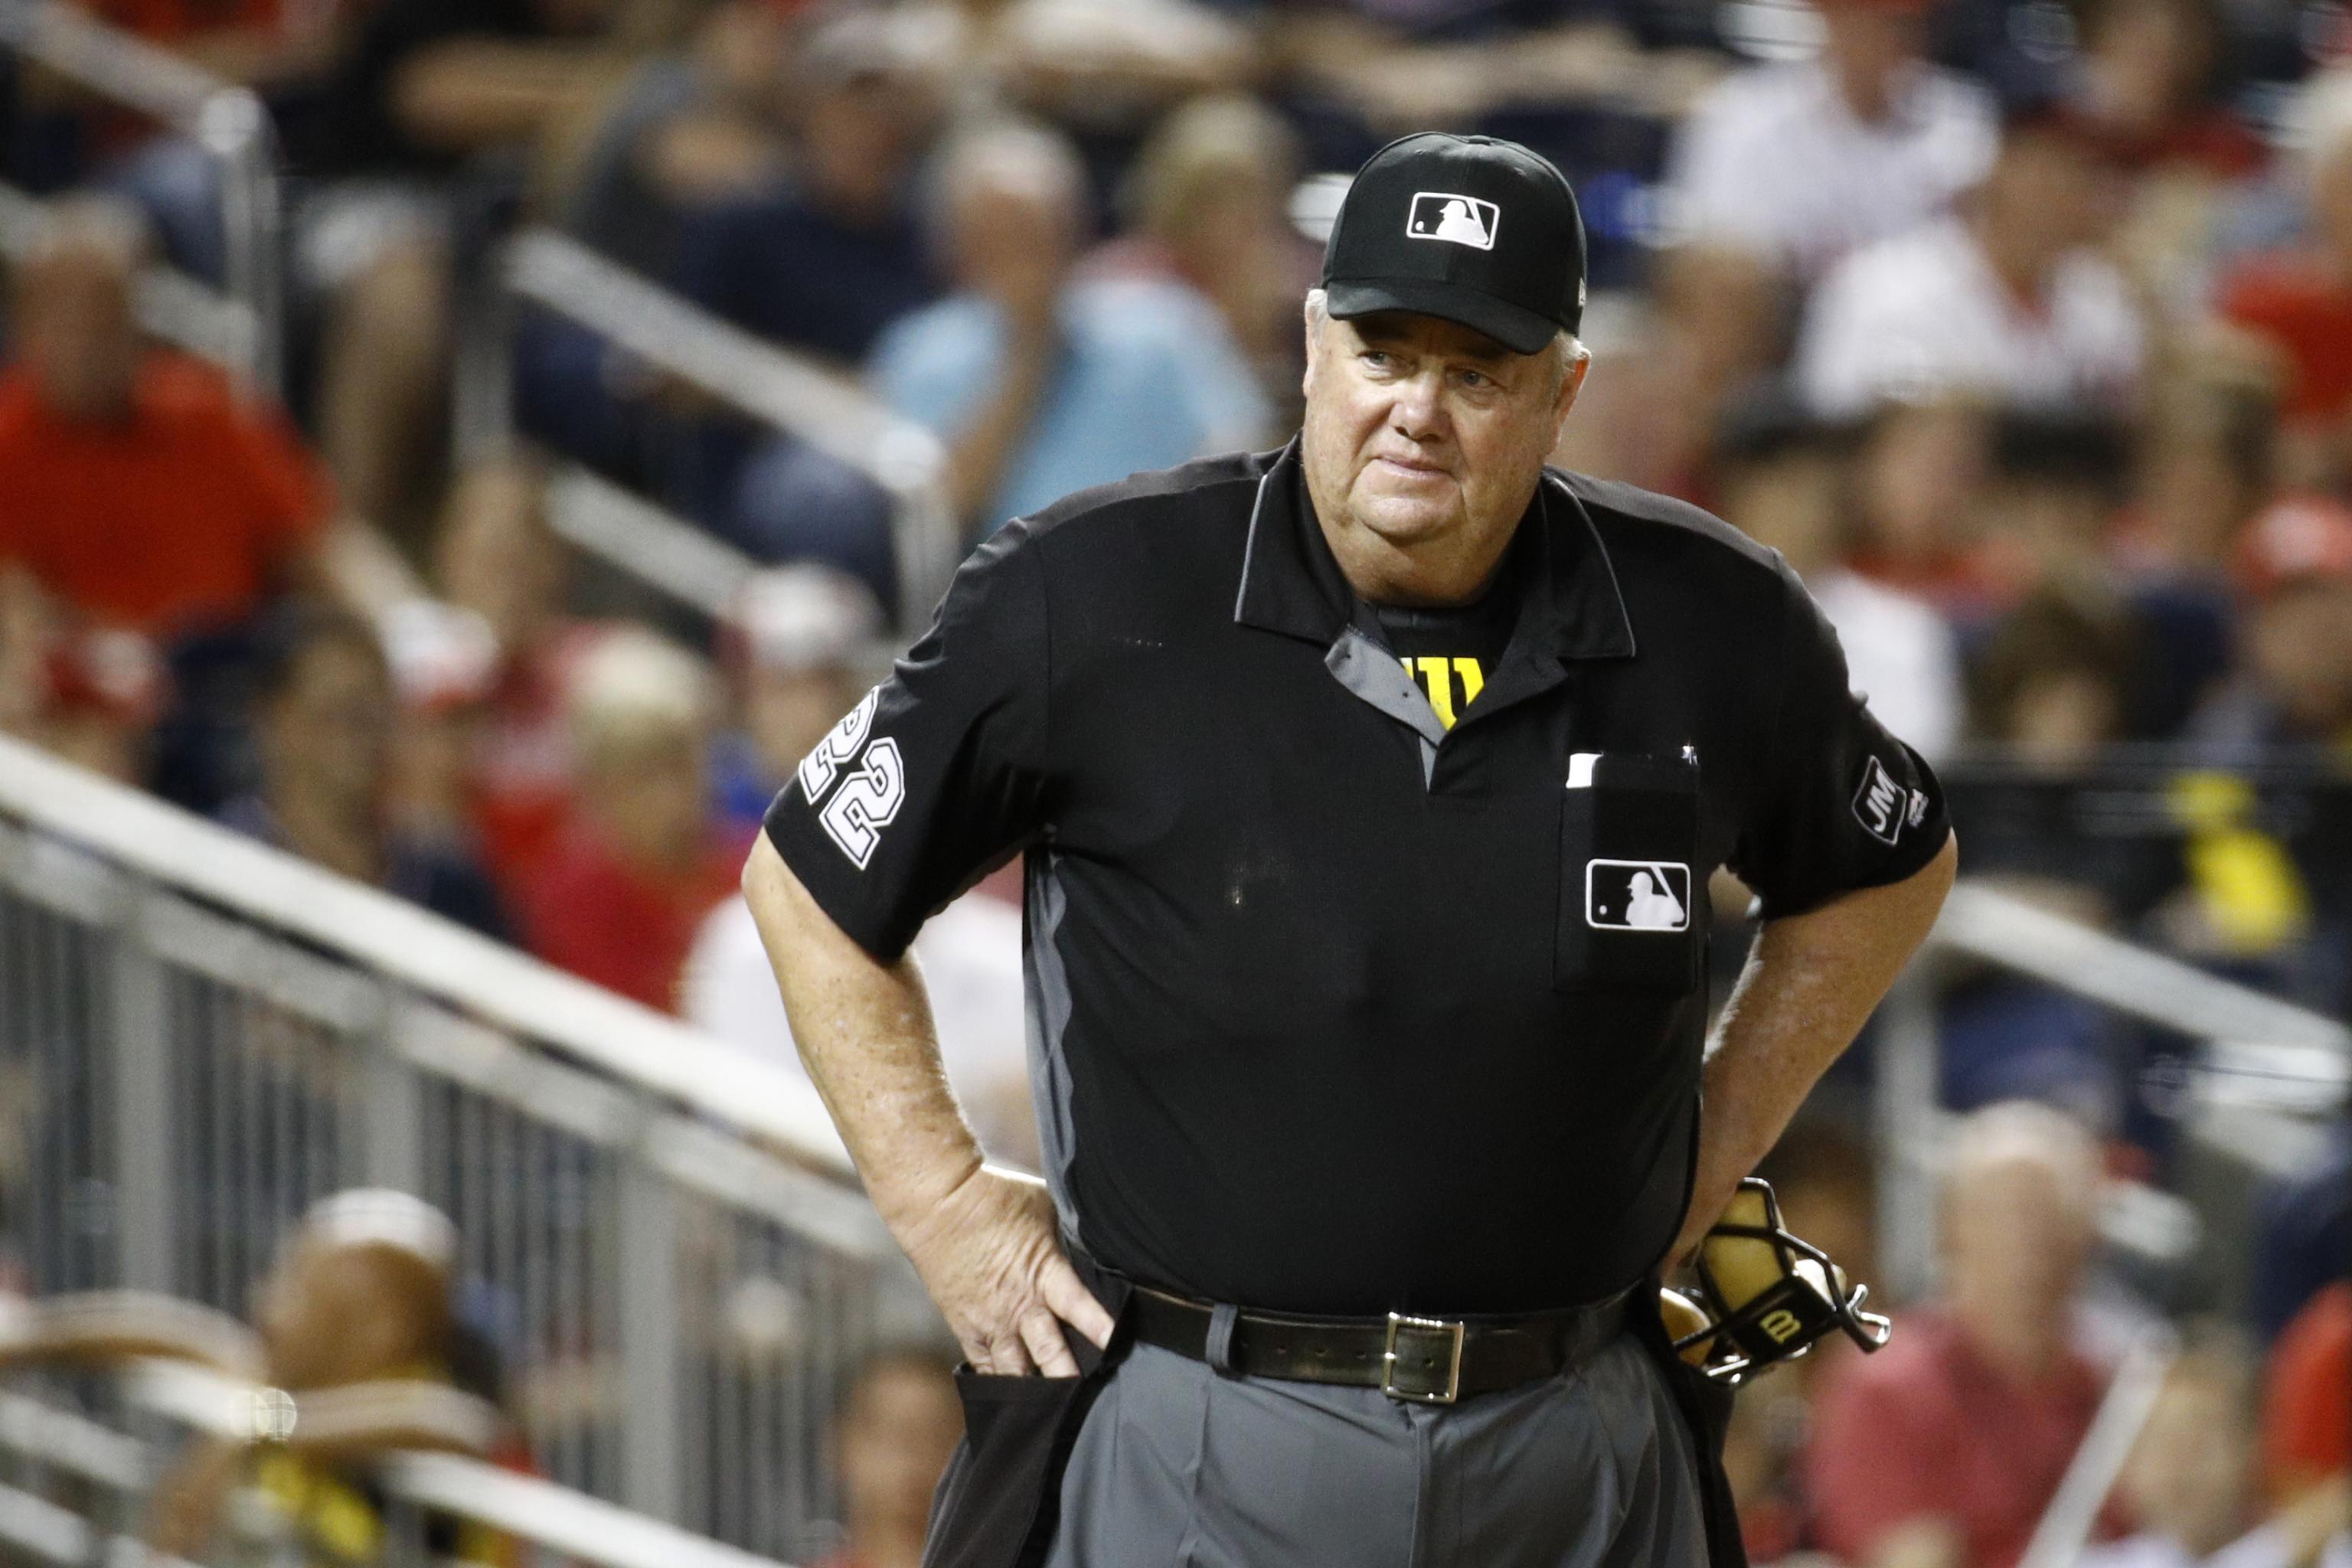 Major League Baseball Umpires Association (@MLBUA) / X